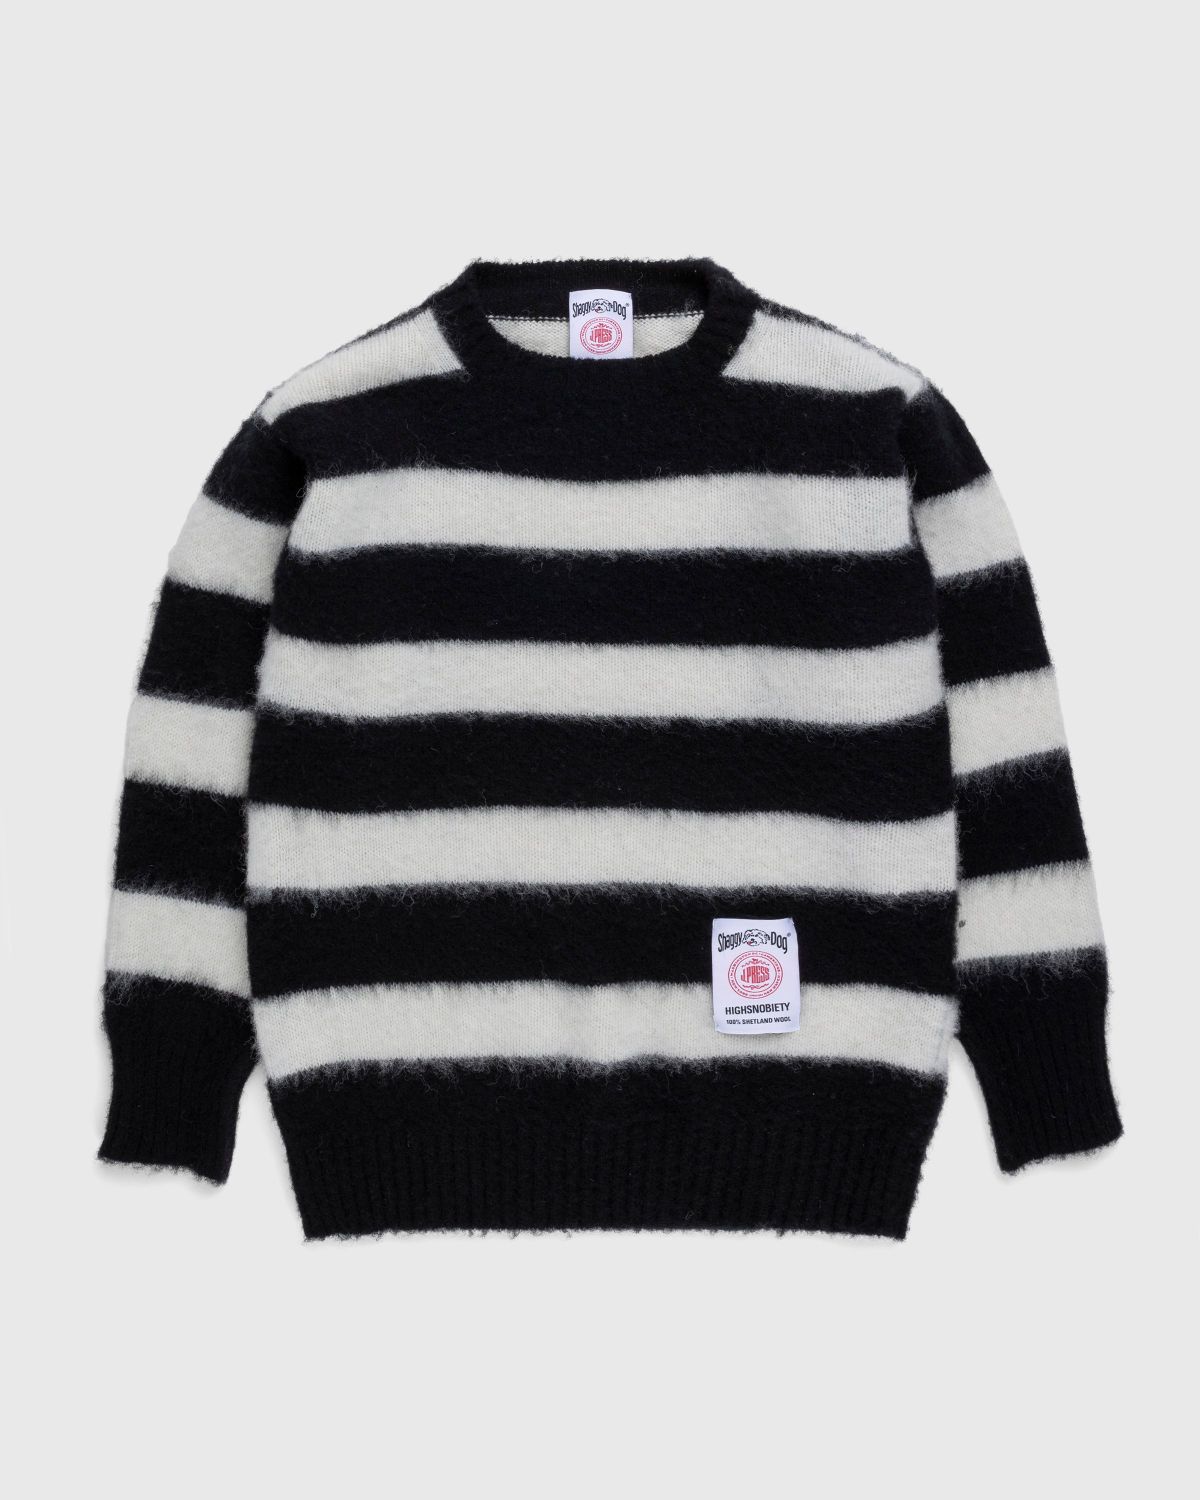 J. Press x Highsnobiety – Shaggy Dog Stripe Sweater Black/Cream - Crewnecks - Multi - Image 1